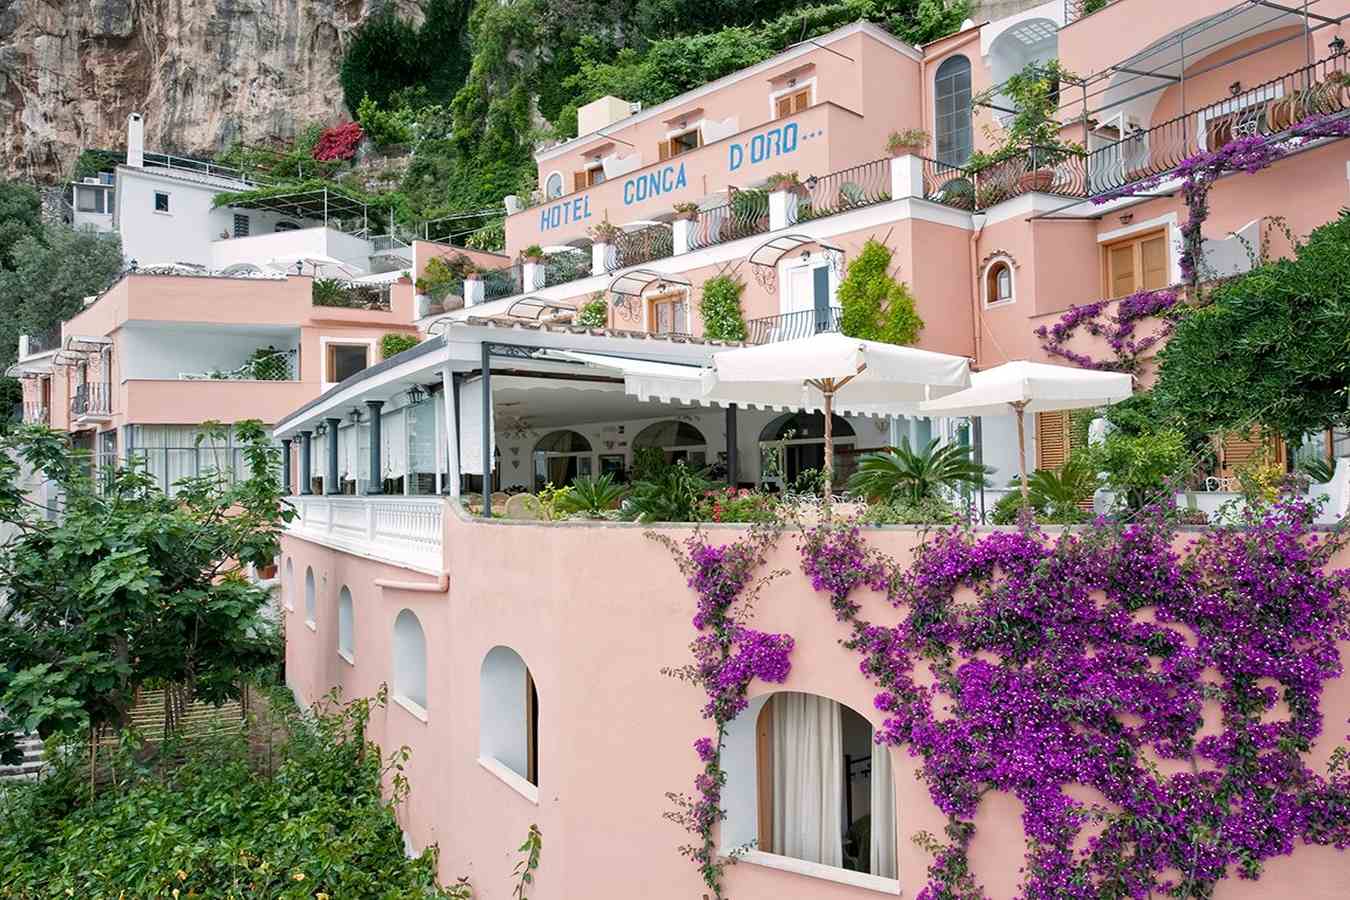 Hotel Conca d'Oro Positano, Amalfi Coast - Italy